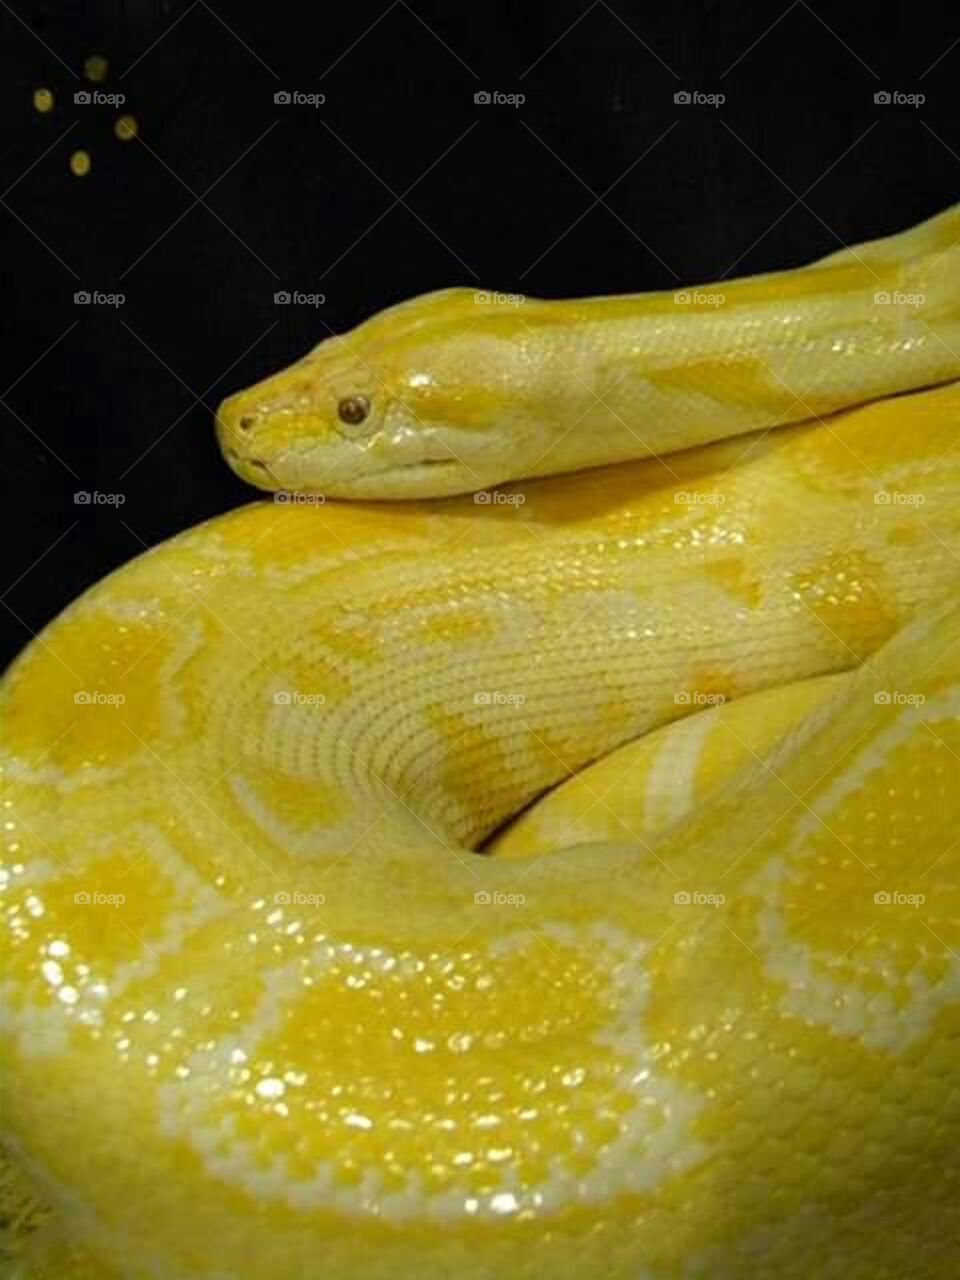 image of yellow Burmese python up close